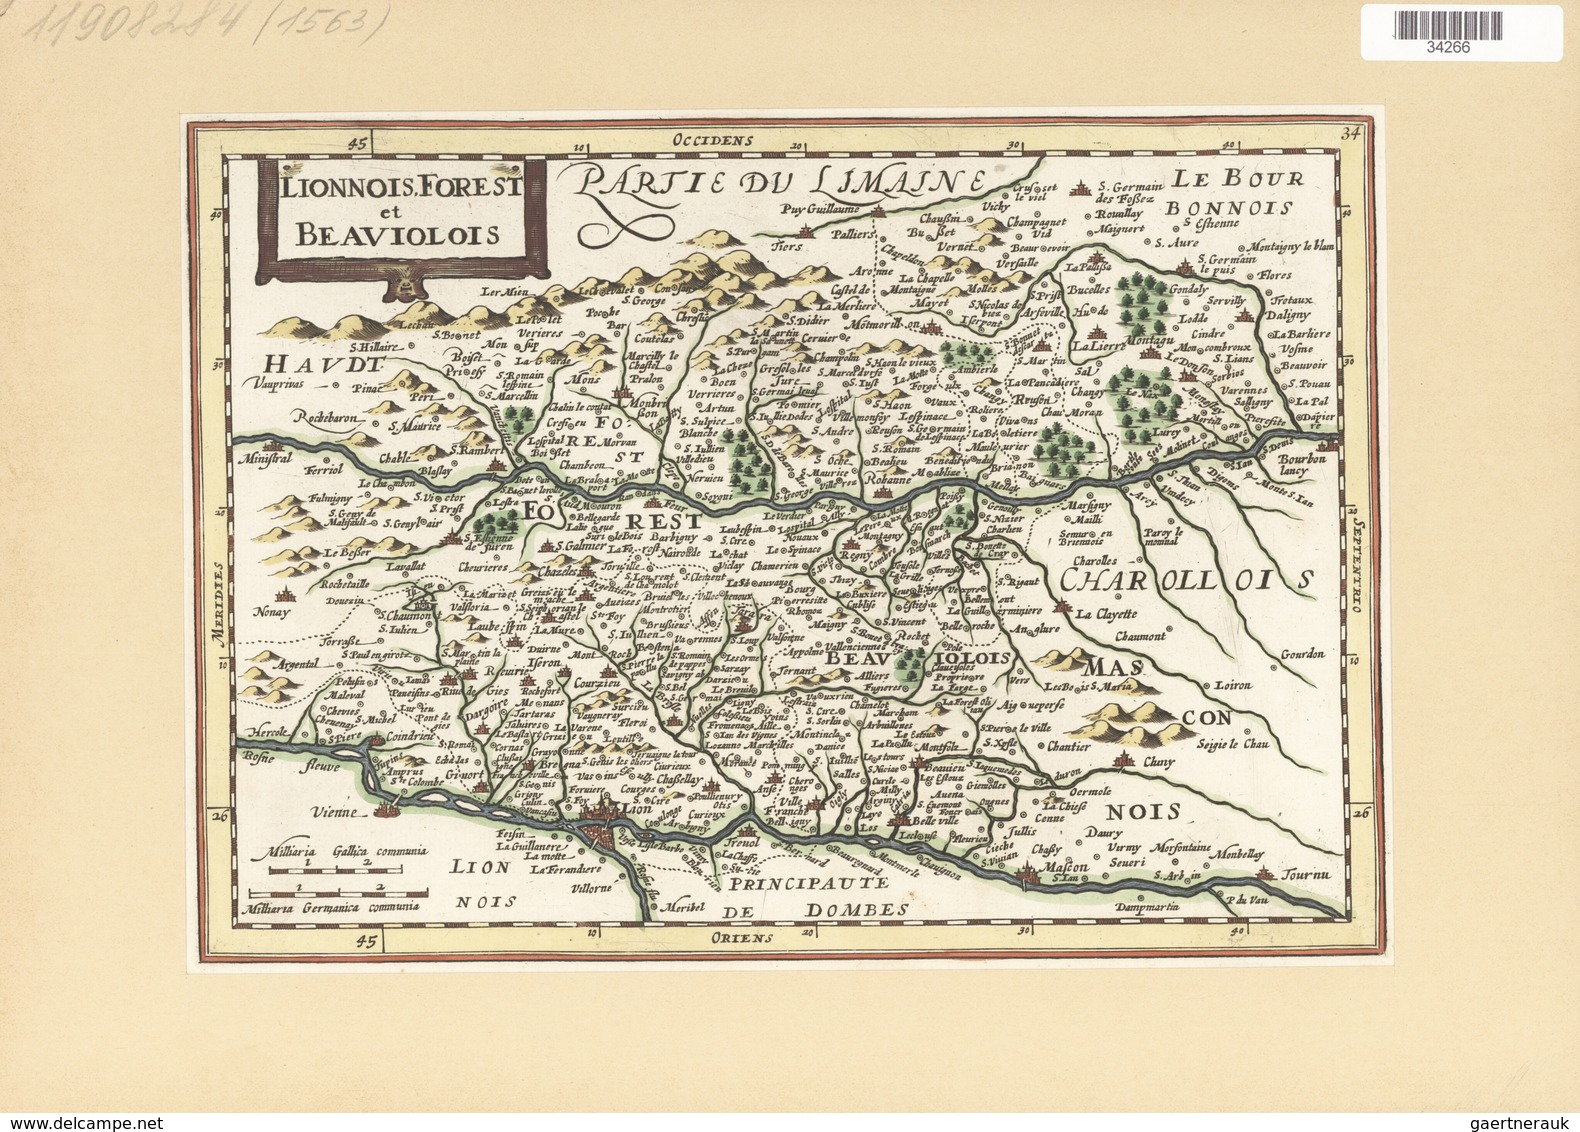 Landkarten Und Stiche: 1834. Lionnois Forest Et Beaviolois From The Mercator Atlas Minor Ca 1648, La - Geographie